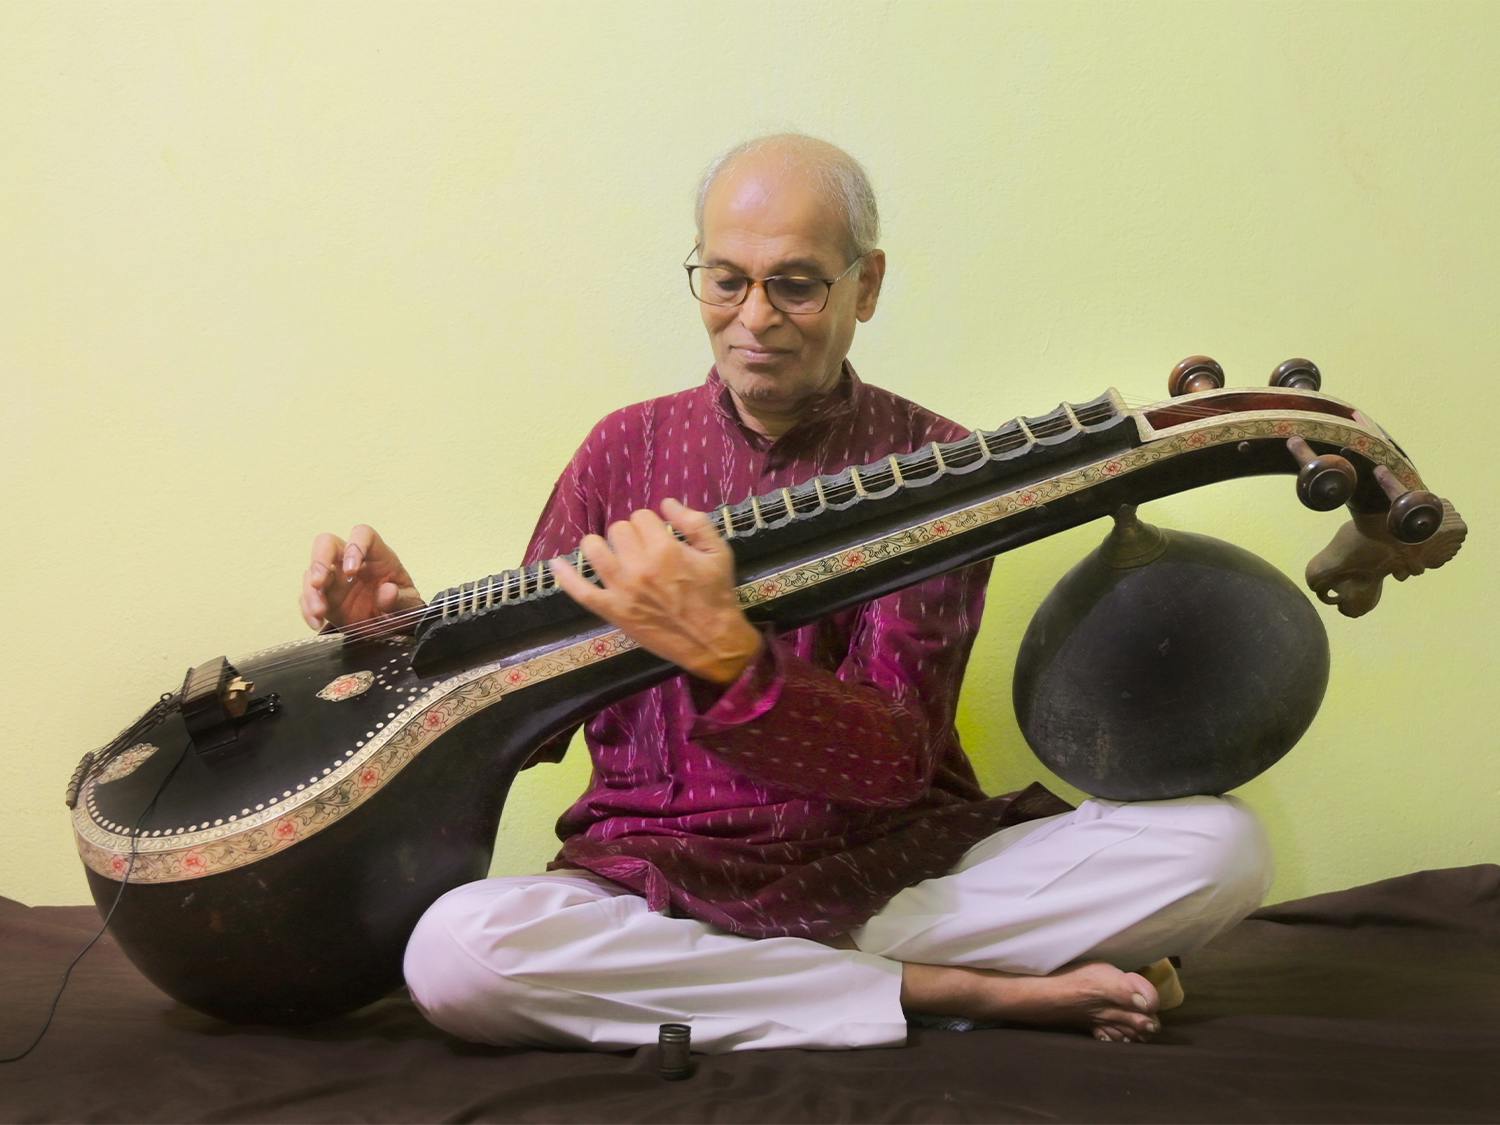 veena indian musical instrument